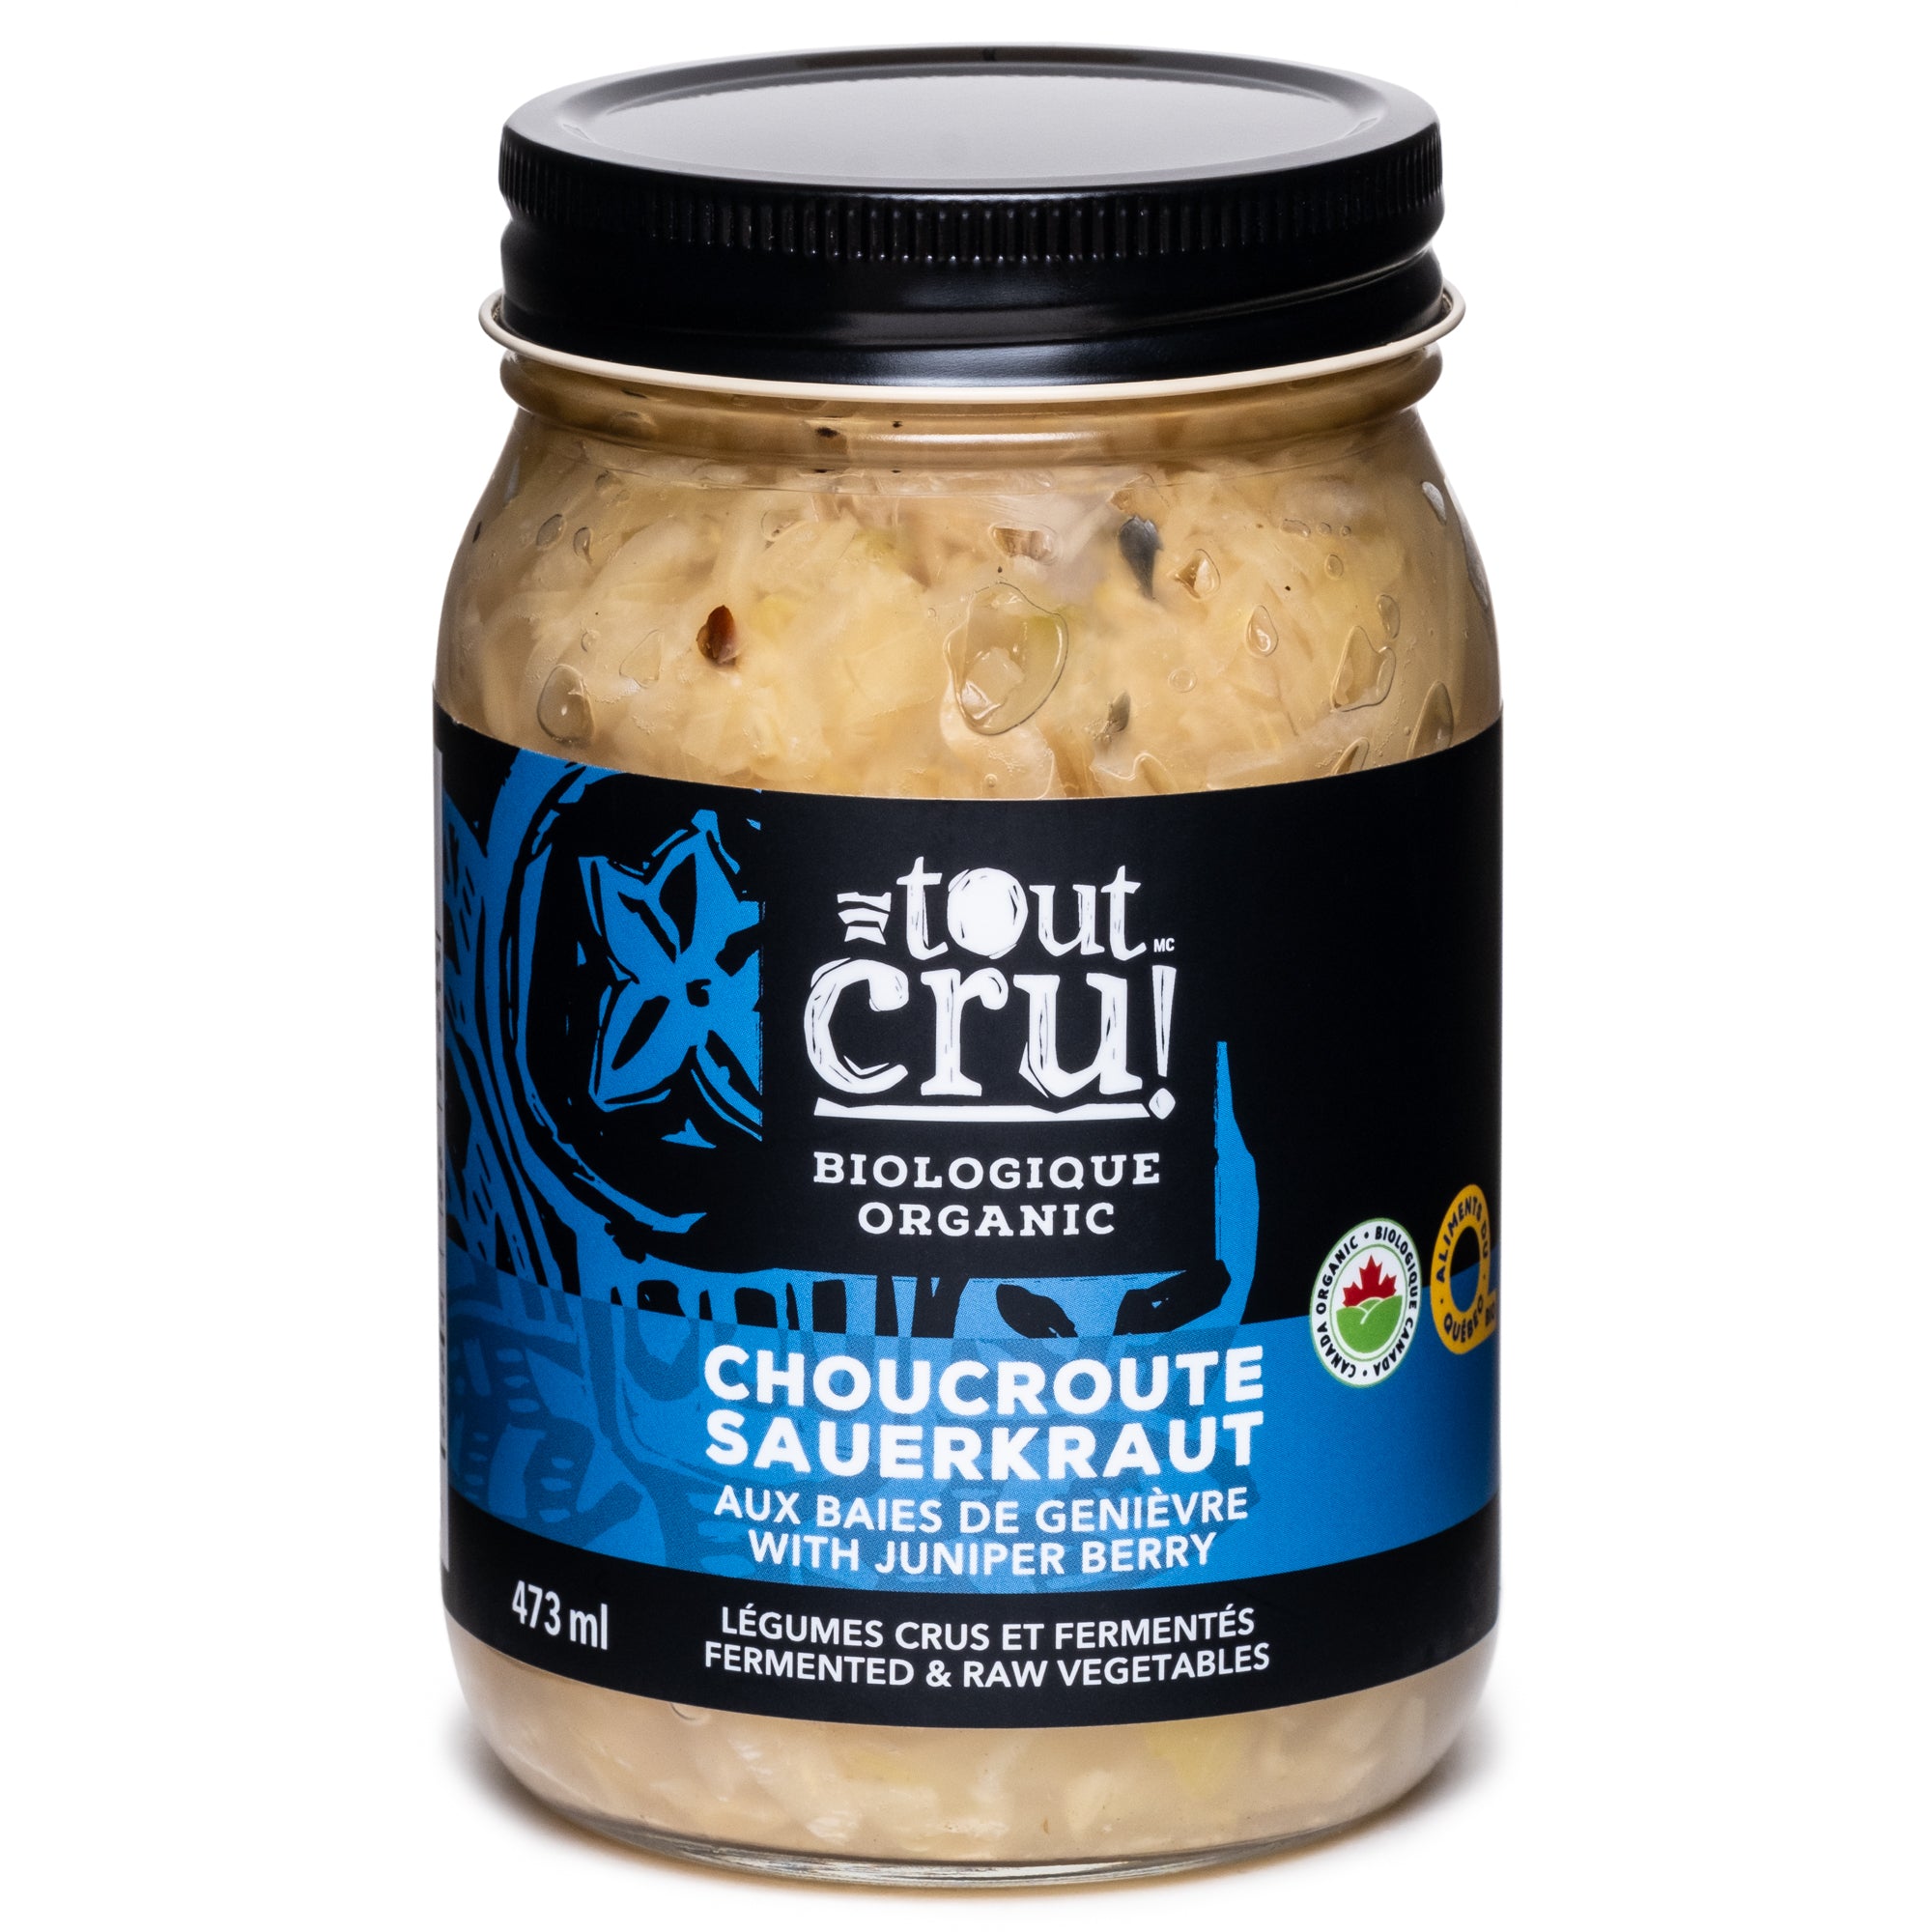 Organic sauerkraut with juniper berries - Pascualita - Tout cru! Fermentation